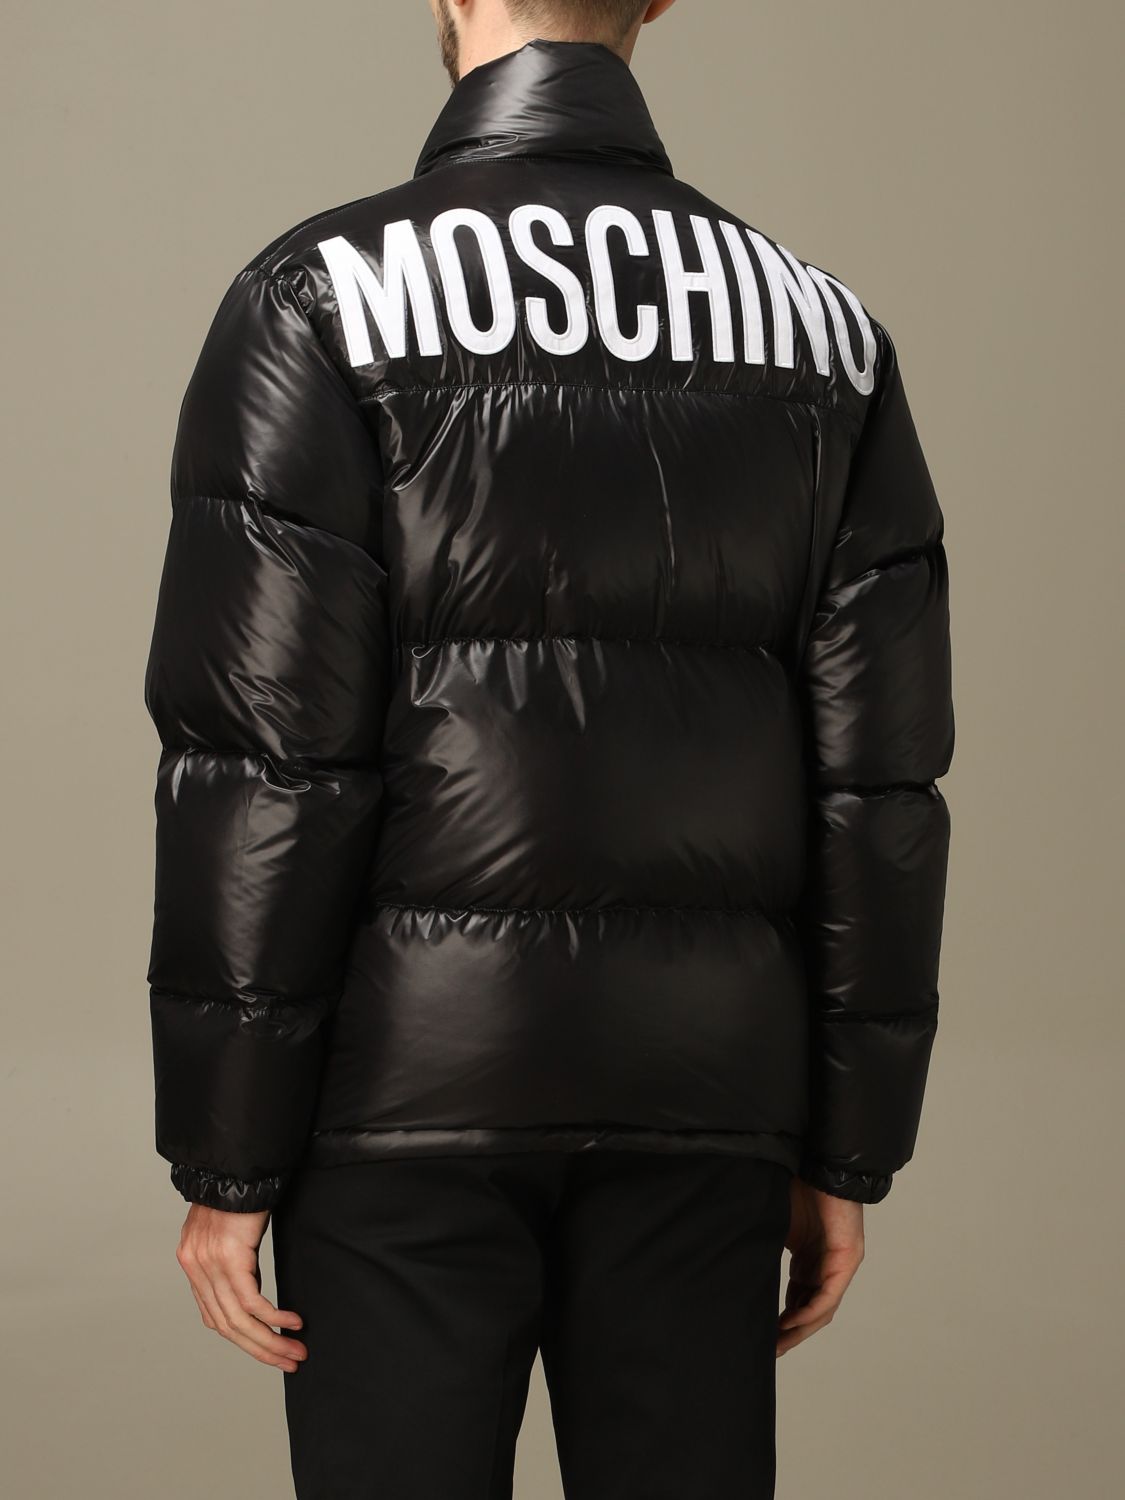 moschino jacket mens